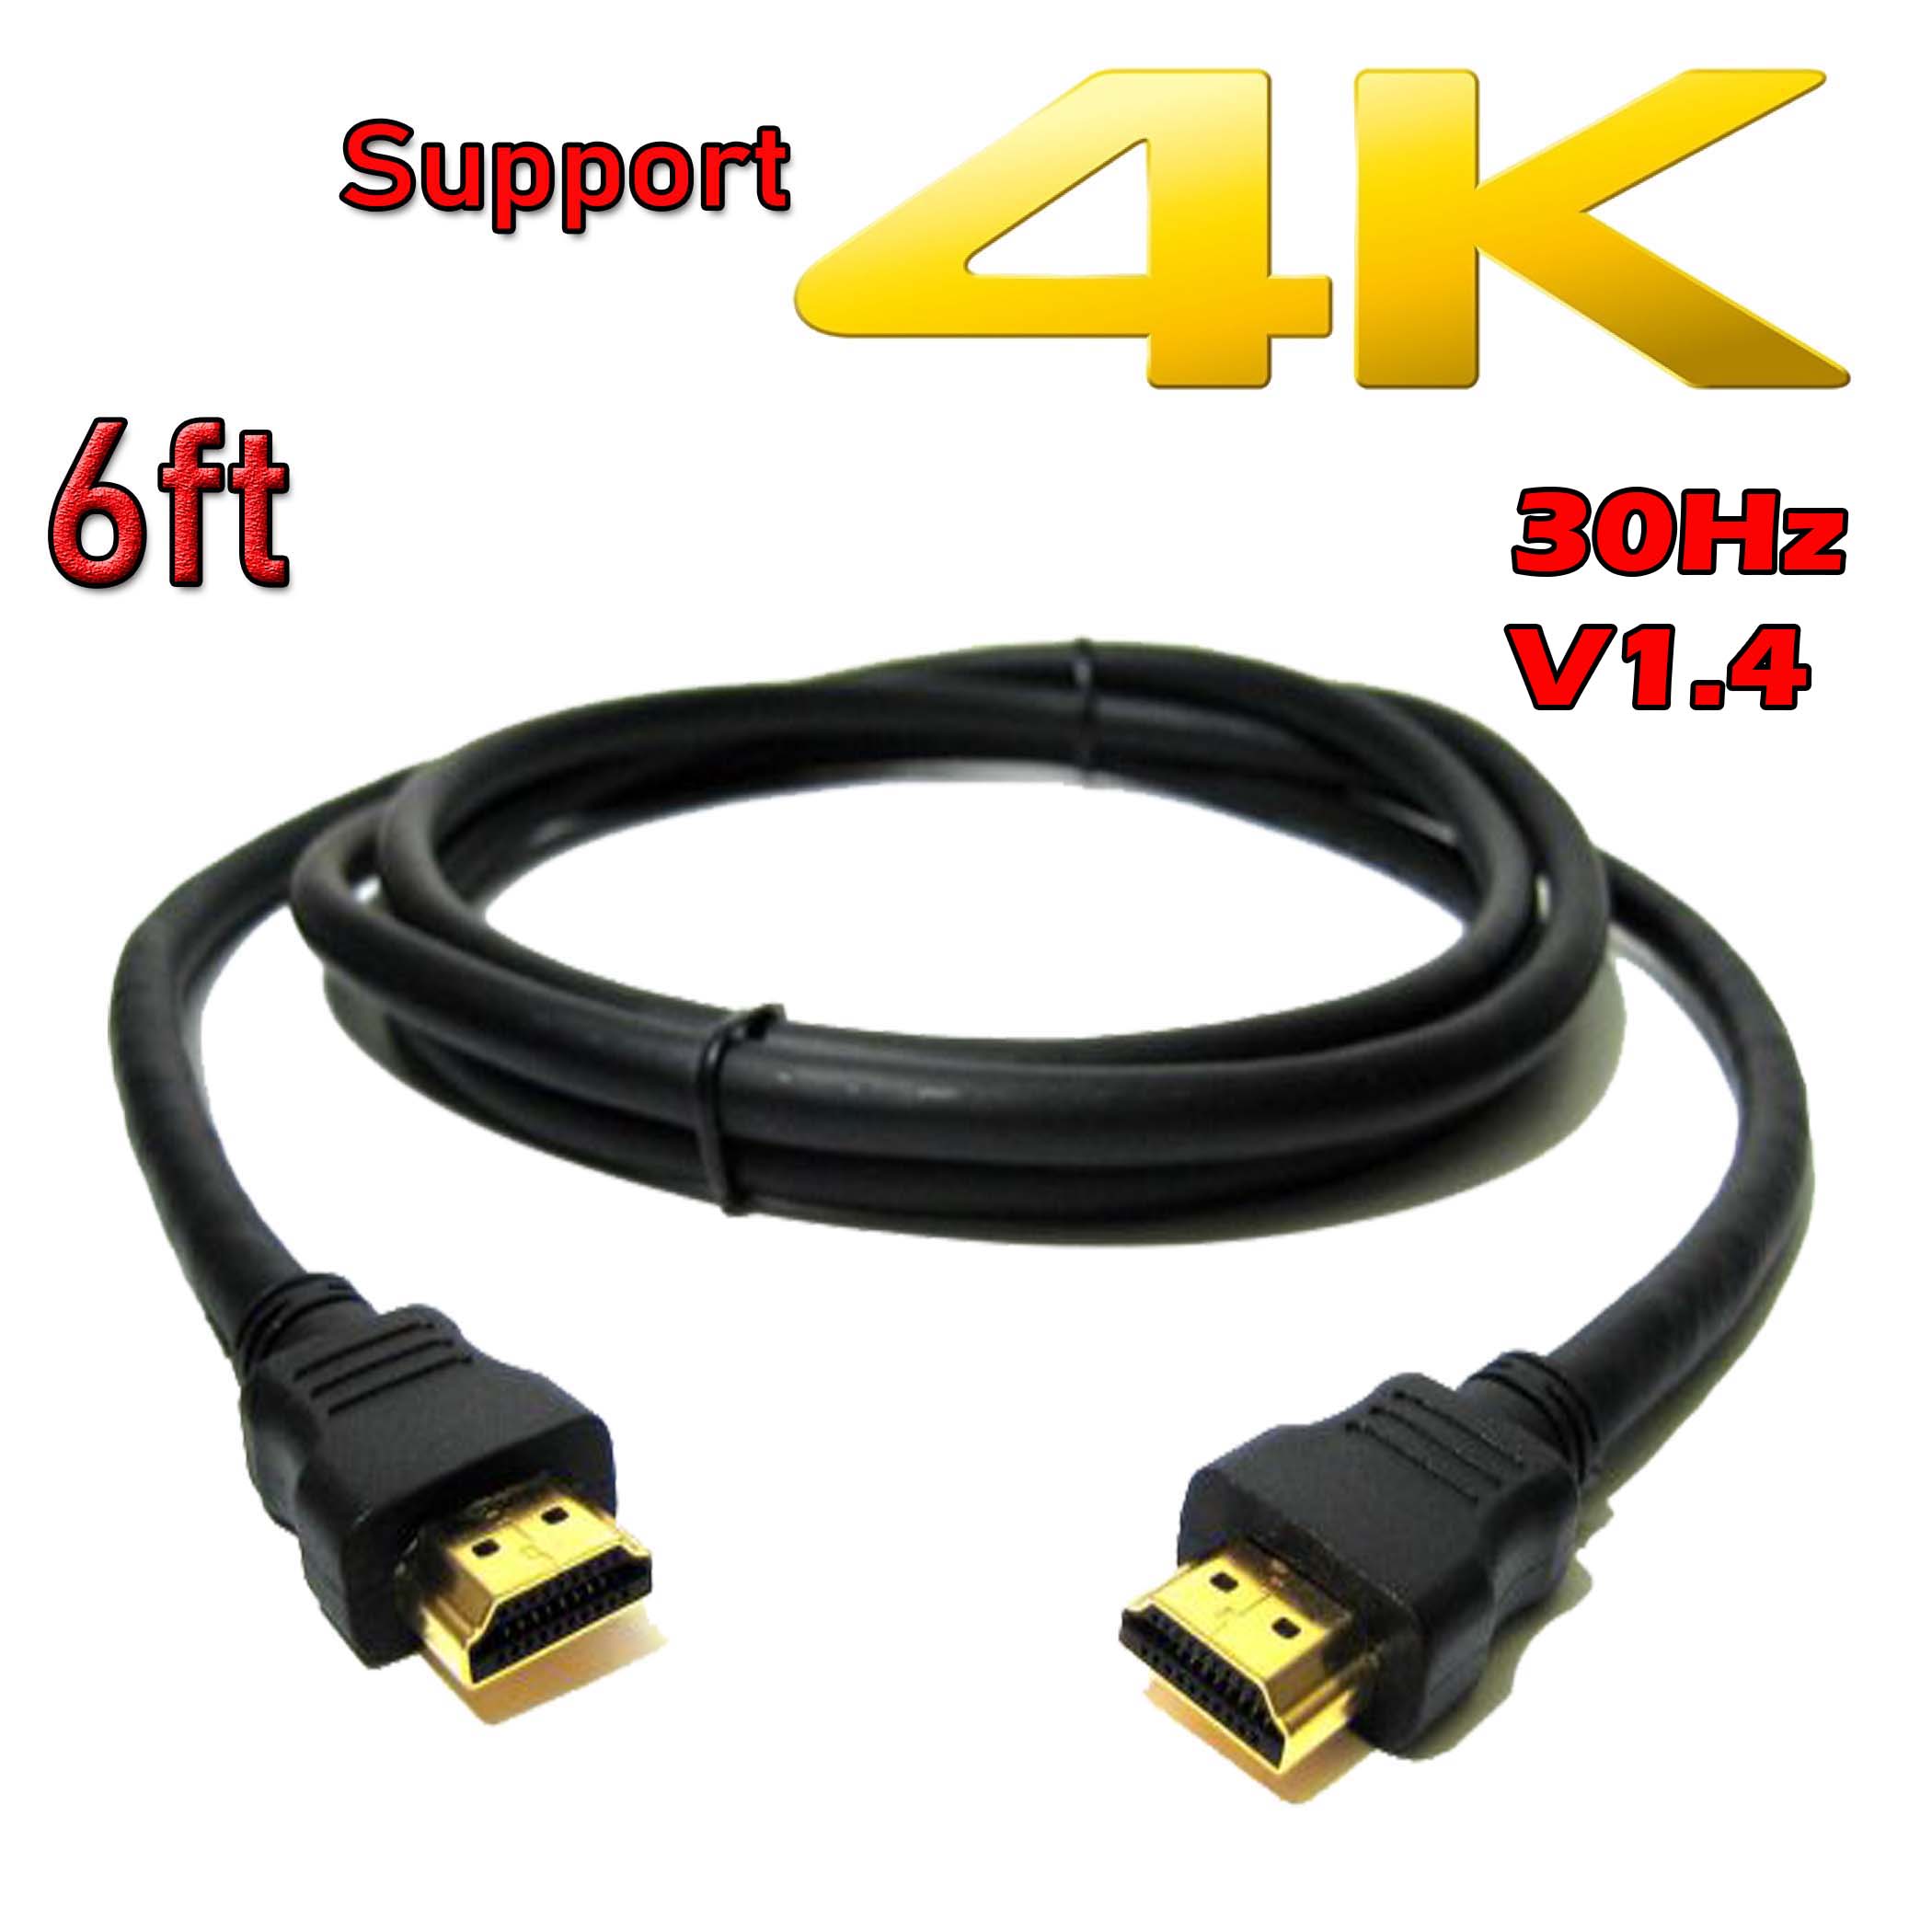  Cable HDMI a HDMI de 6 pies (escaparate de cable) : Electrónica